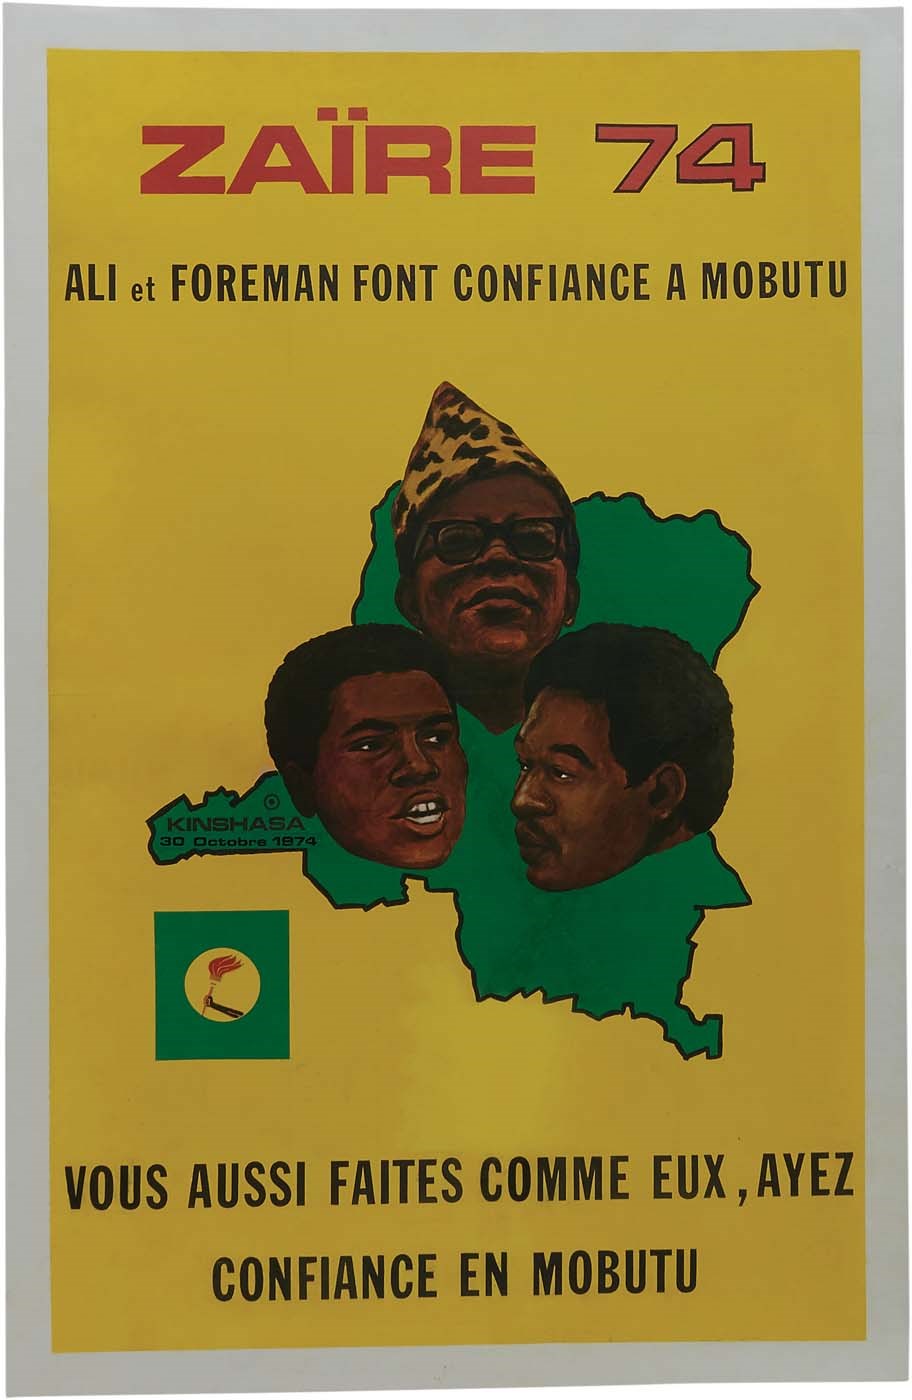 - Muhammad Ali v. George Foreman On Site Poster (1974)